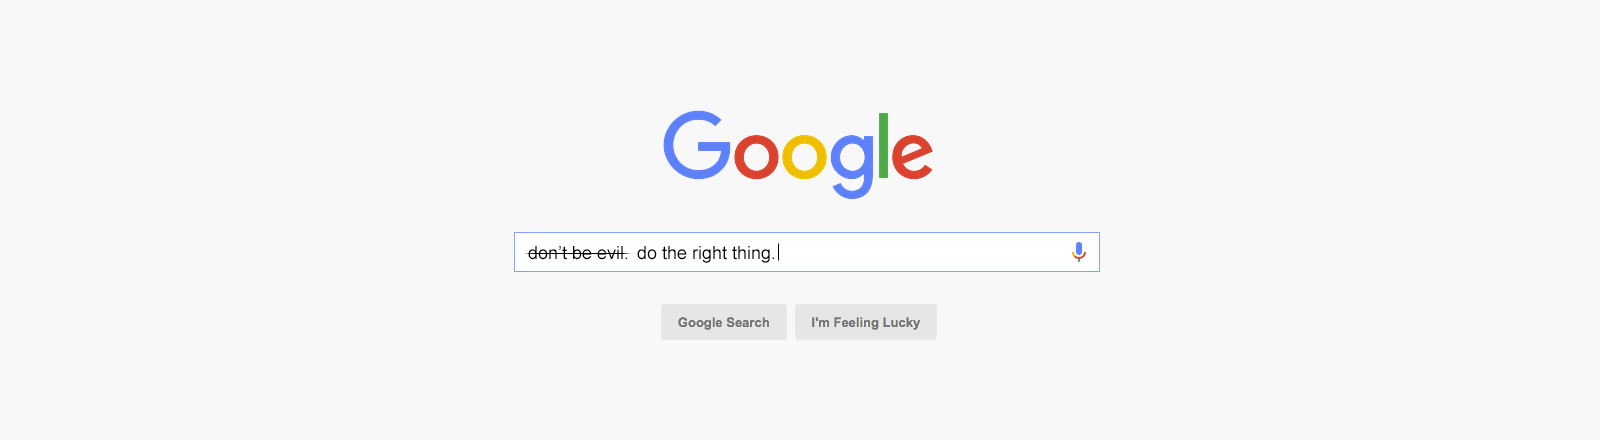 Ok google военные. Гуглить. Google do the right thing.